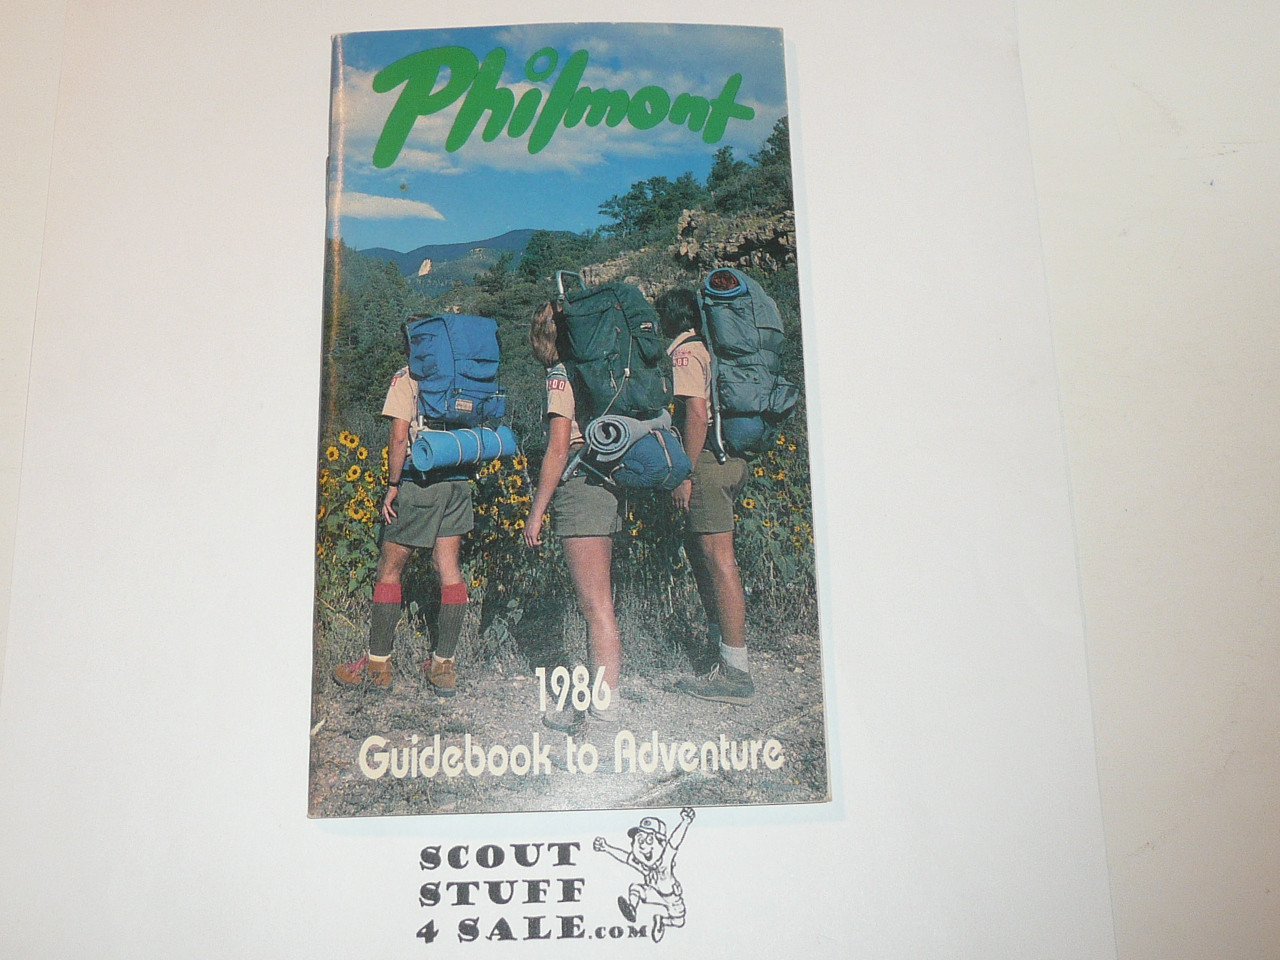 1986 Philmont Guidebook to Adventure